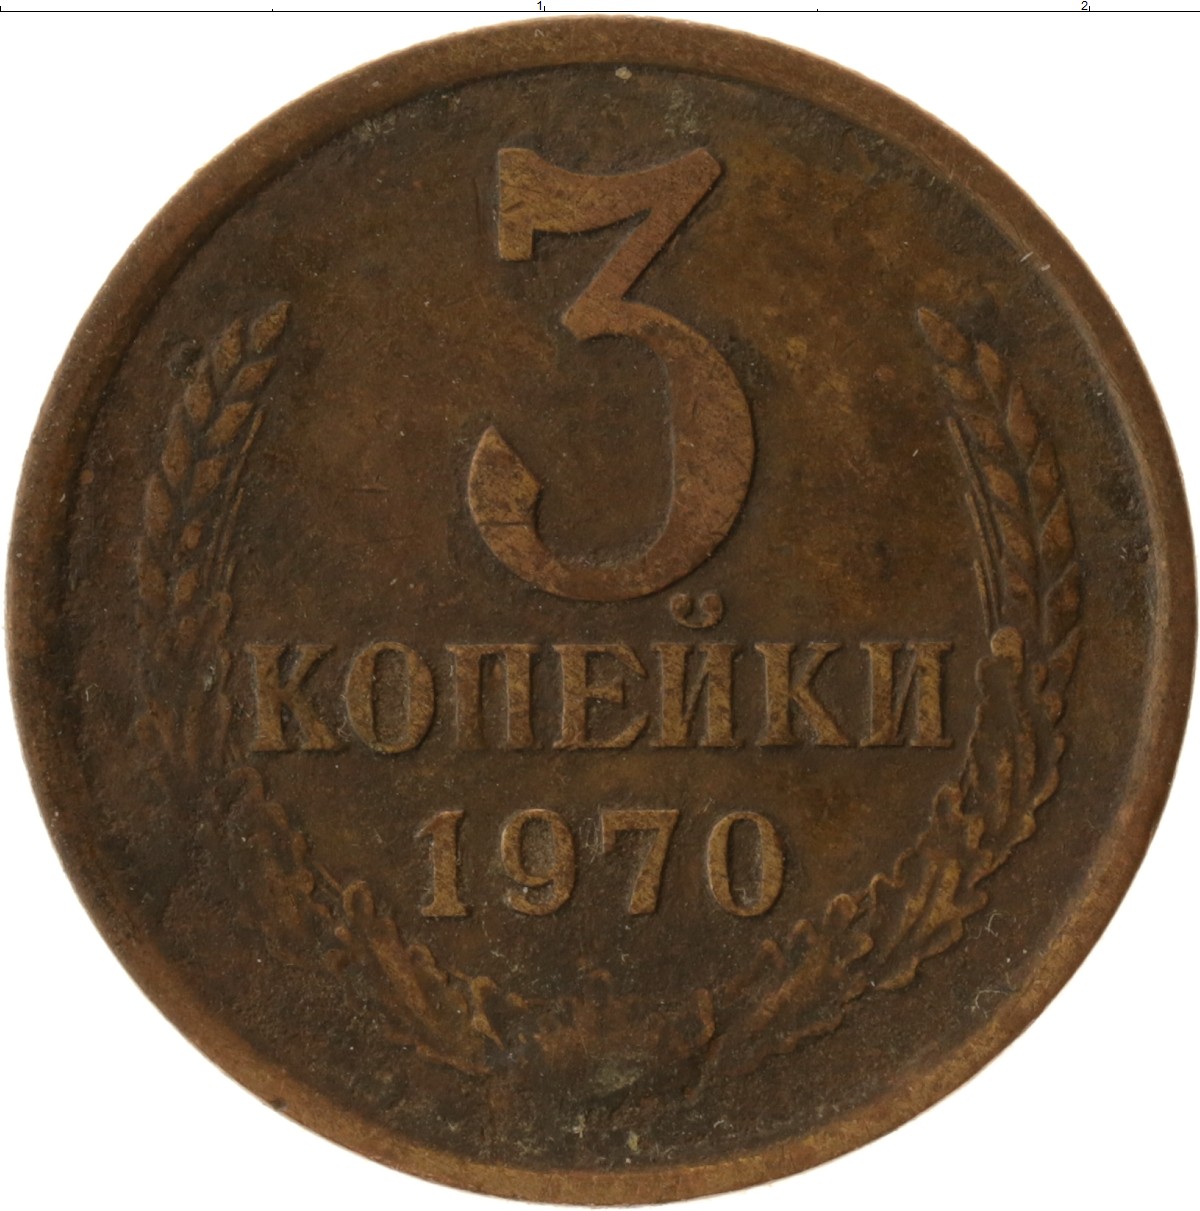 3 копейки. Монета 3 копейки 1970 СССР. Три копейки монета. Копейка 1970 года. Монета 20 копейки 1970 СССР.